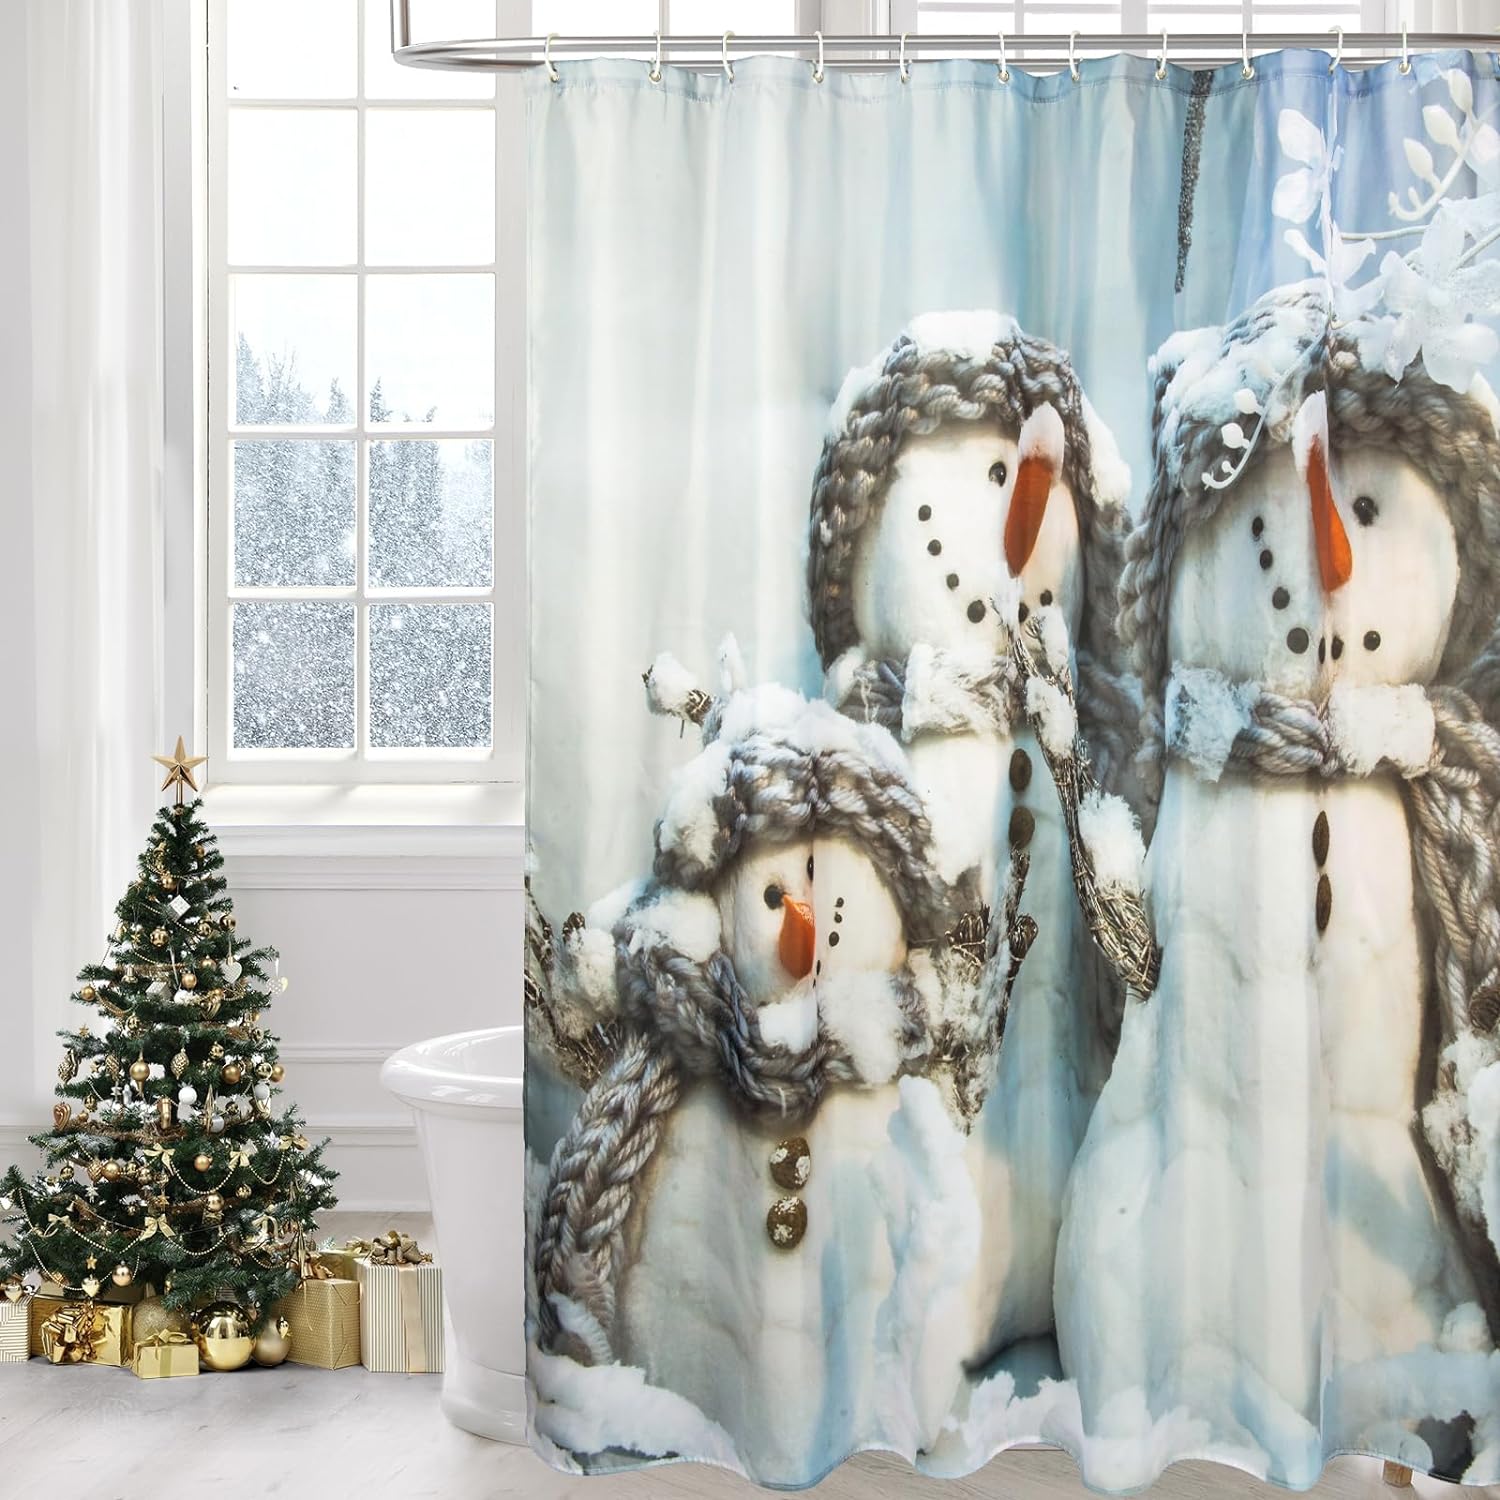 QIYI Christmas Shower Curtain Set, New Year Snowman Bathroom Accessories Holiday Home Dcor, Grey Snowy Winter Waterproof Bathtub Curtain, Kids Cute Merry Xmas Bath Curtain with 10 Hooks 60 W x 72 L